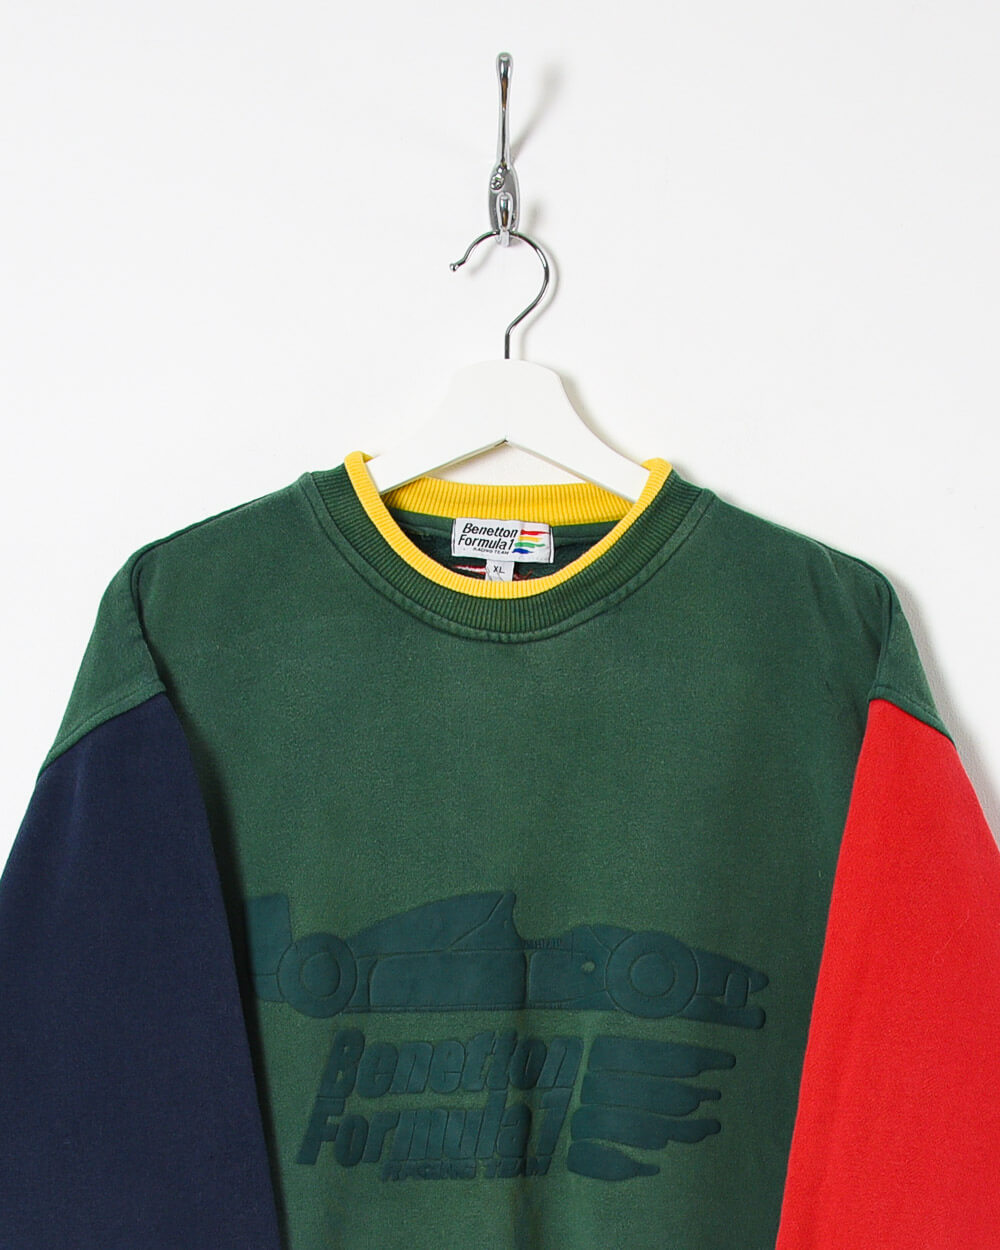 Benetton Formula 1 Racing Team Sweatshirt - Large - Domno Vintage 90s, 80s, 00s Retro and Vintage Clothing 